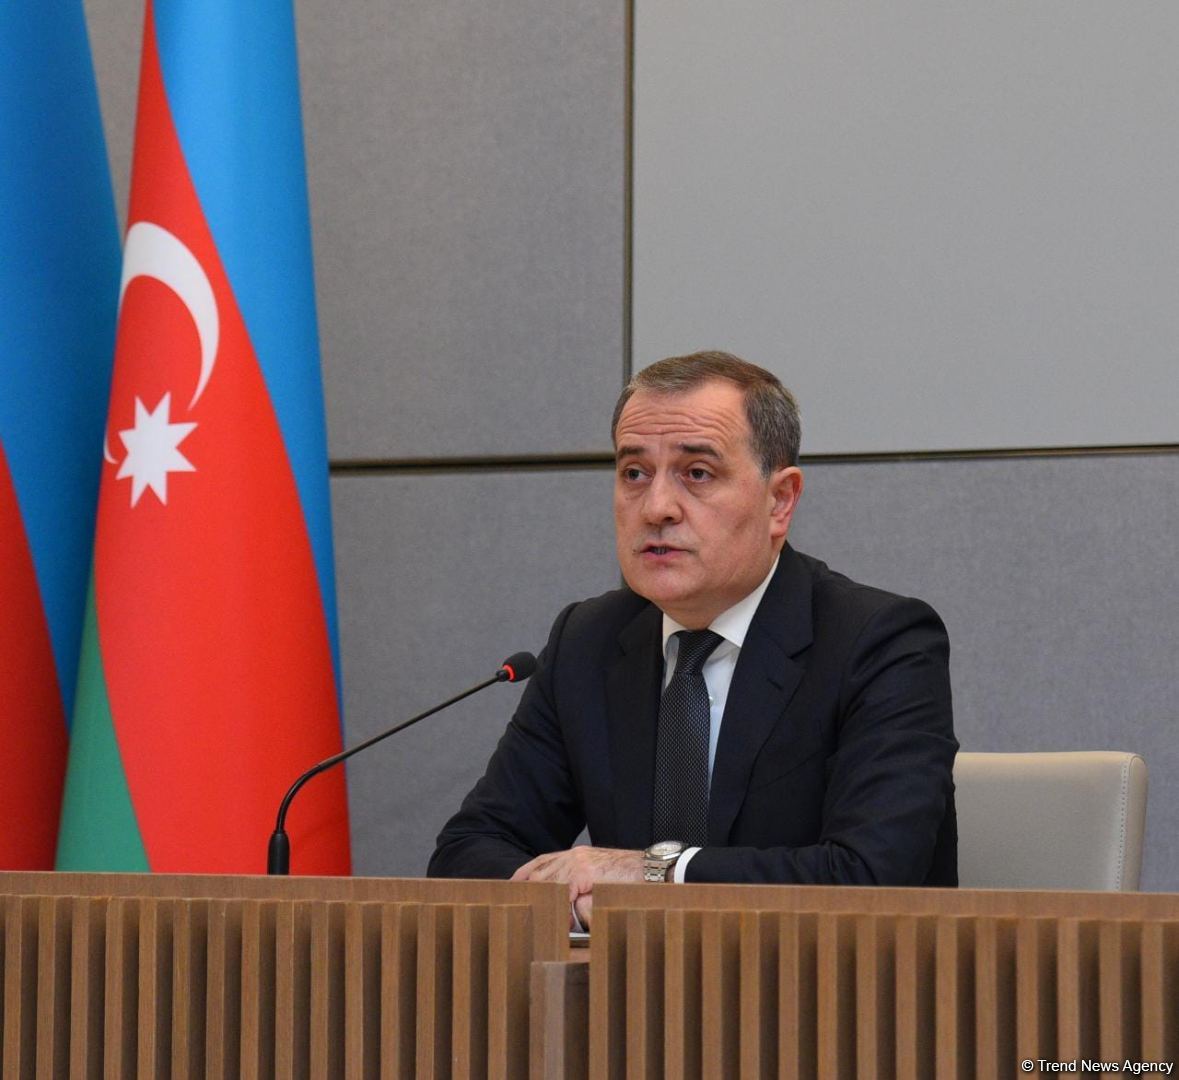 Azerbaijan takes active part in work of Organization of Turkic States - FM